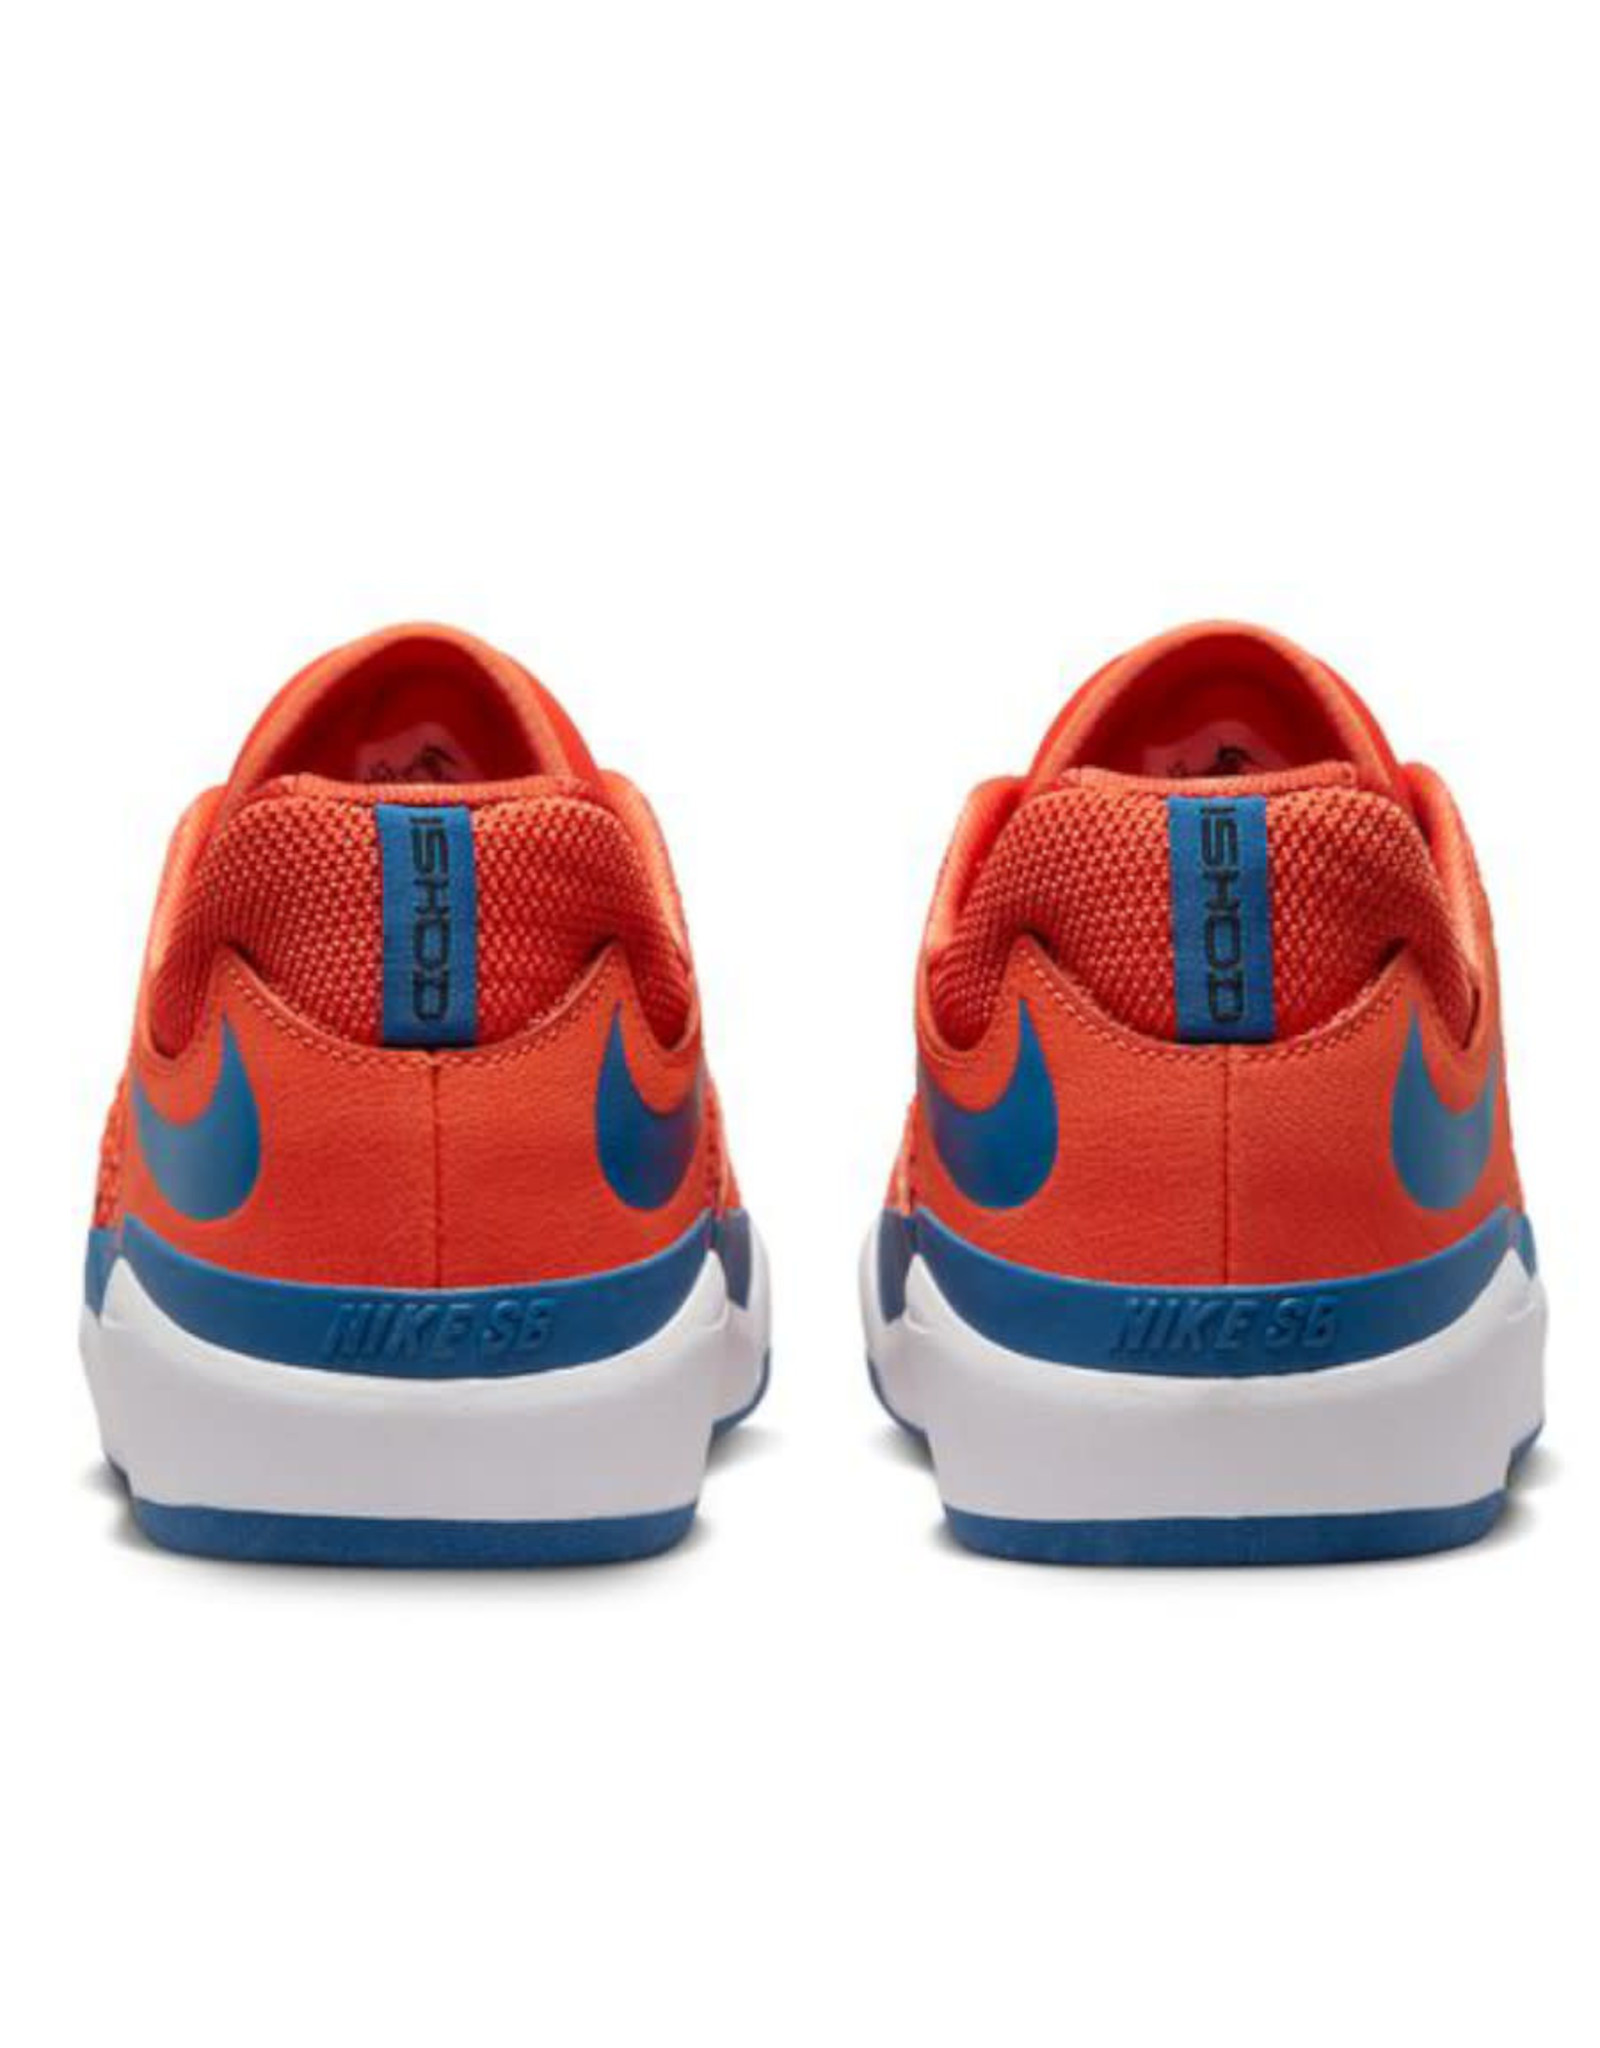 Nike SB Nike SB Shoe Ishod Wair Premium Pro (Mets)